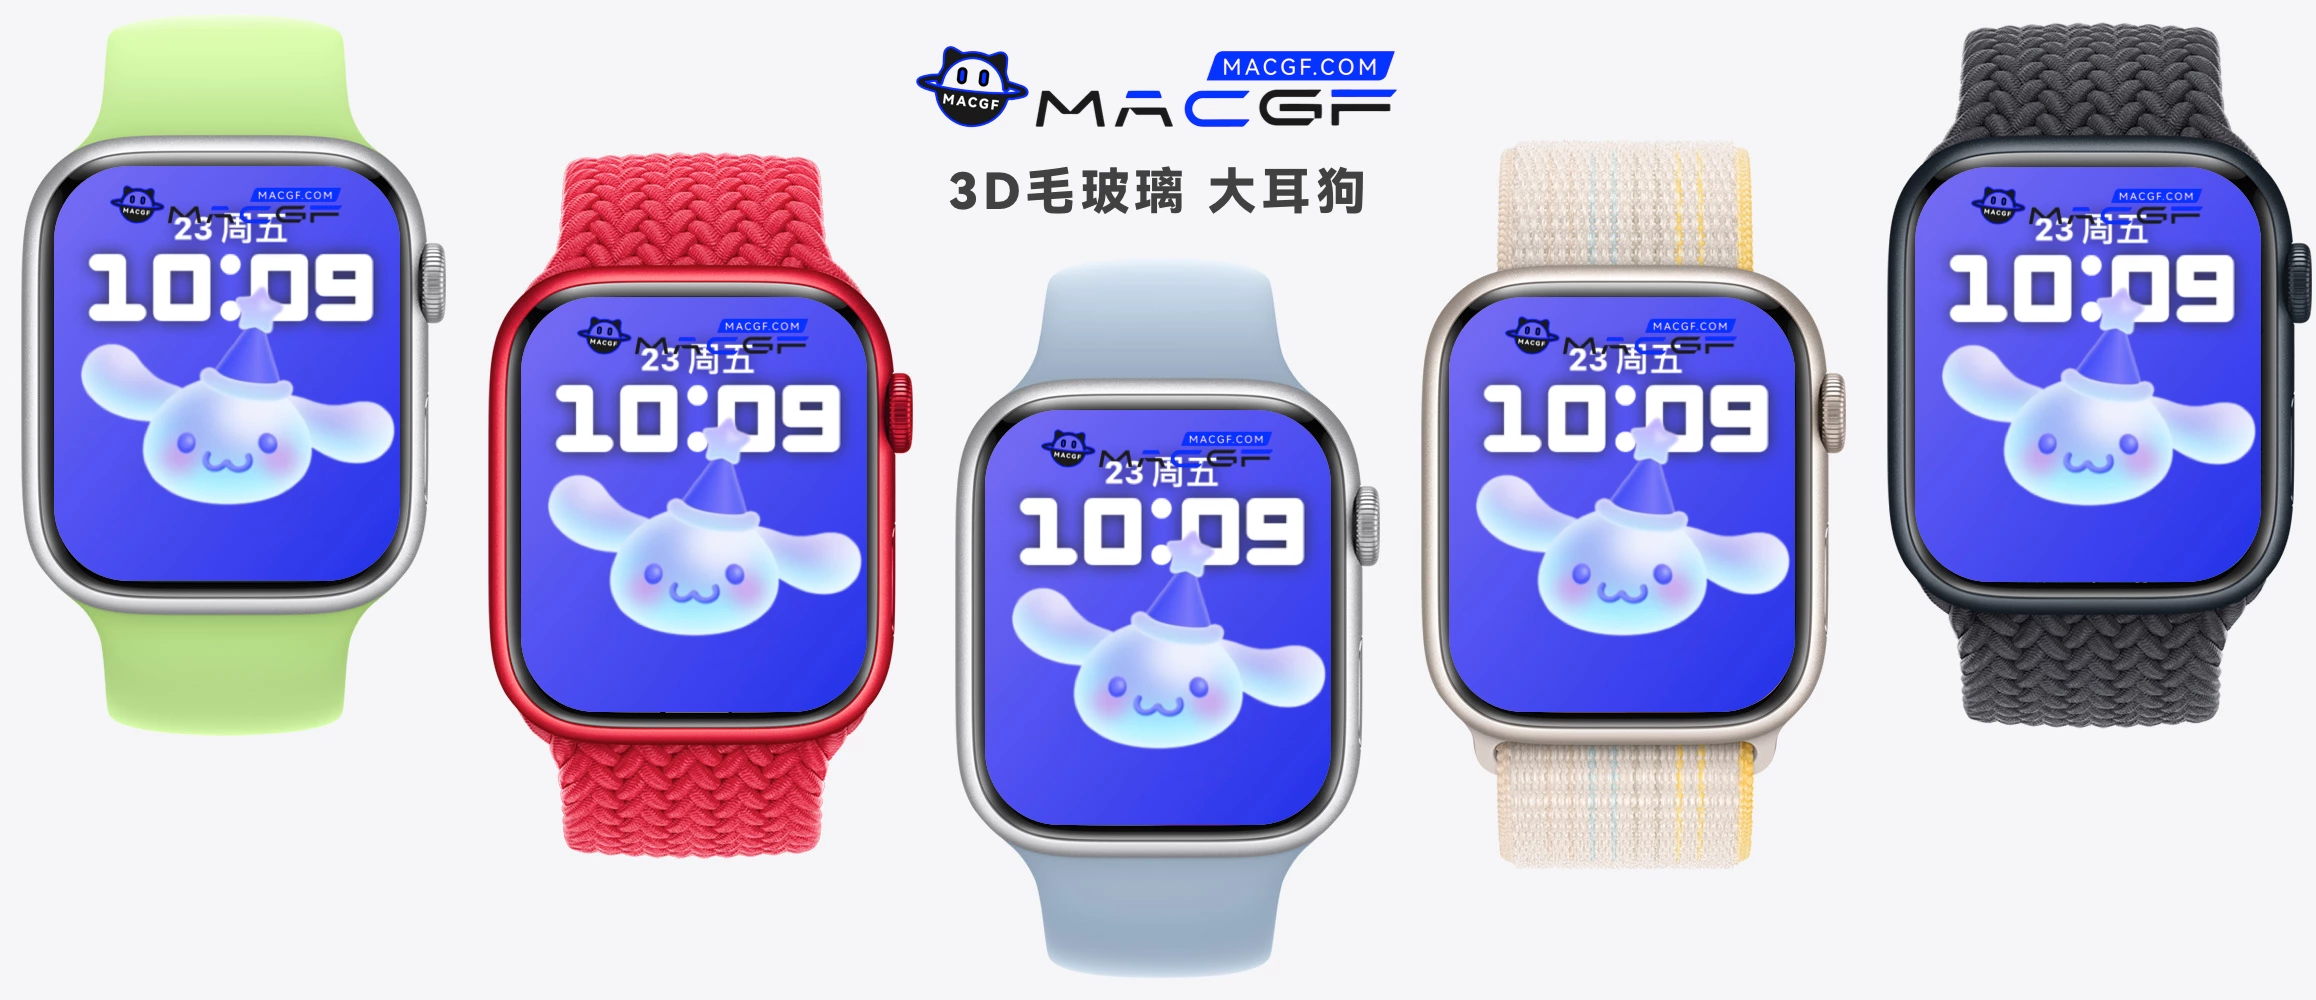 3D毛玻璃 大耳狗 Apple watch 精美原生表盘 - MACGF